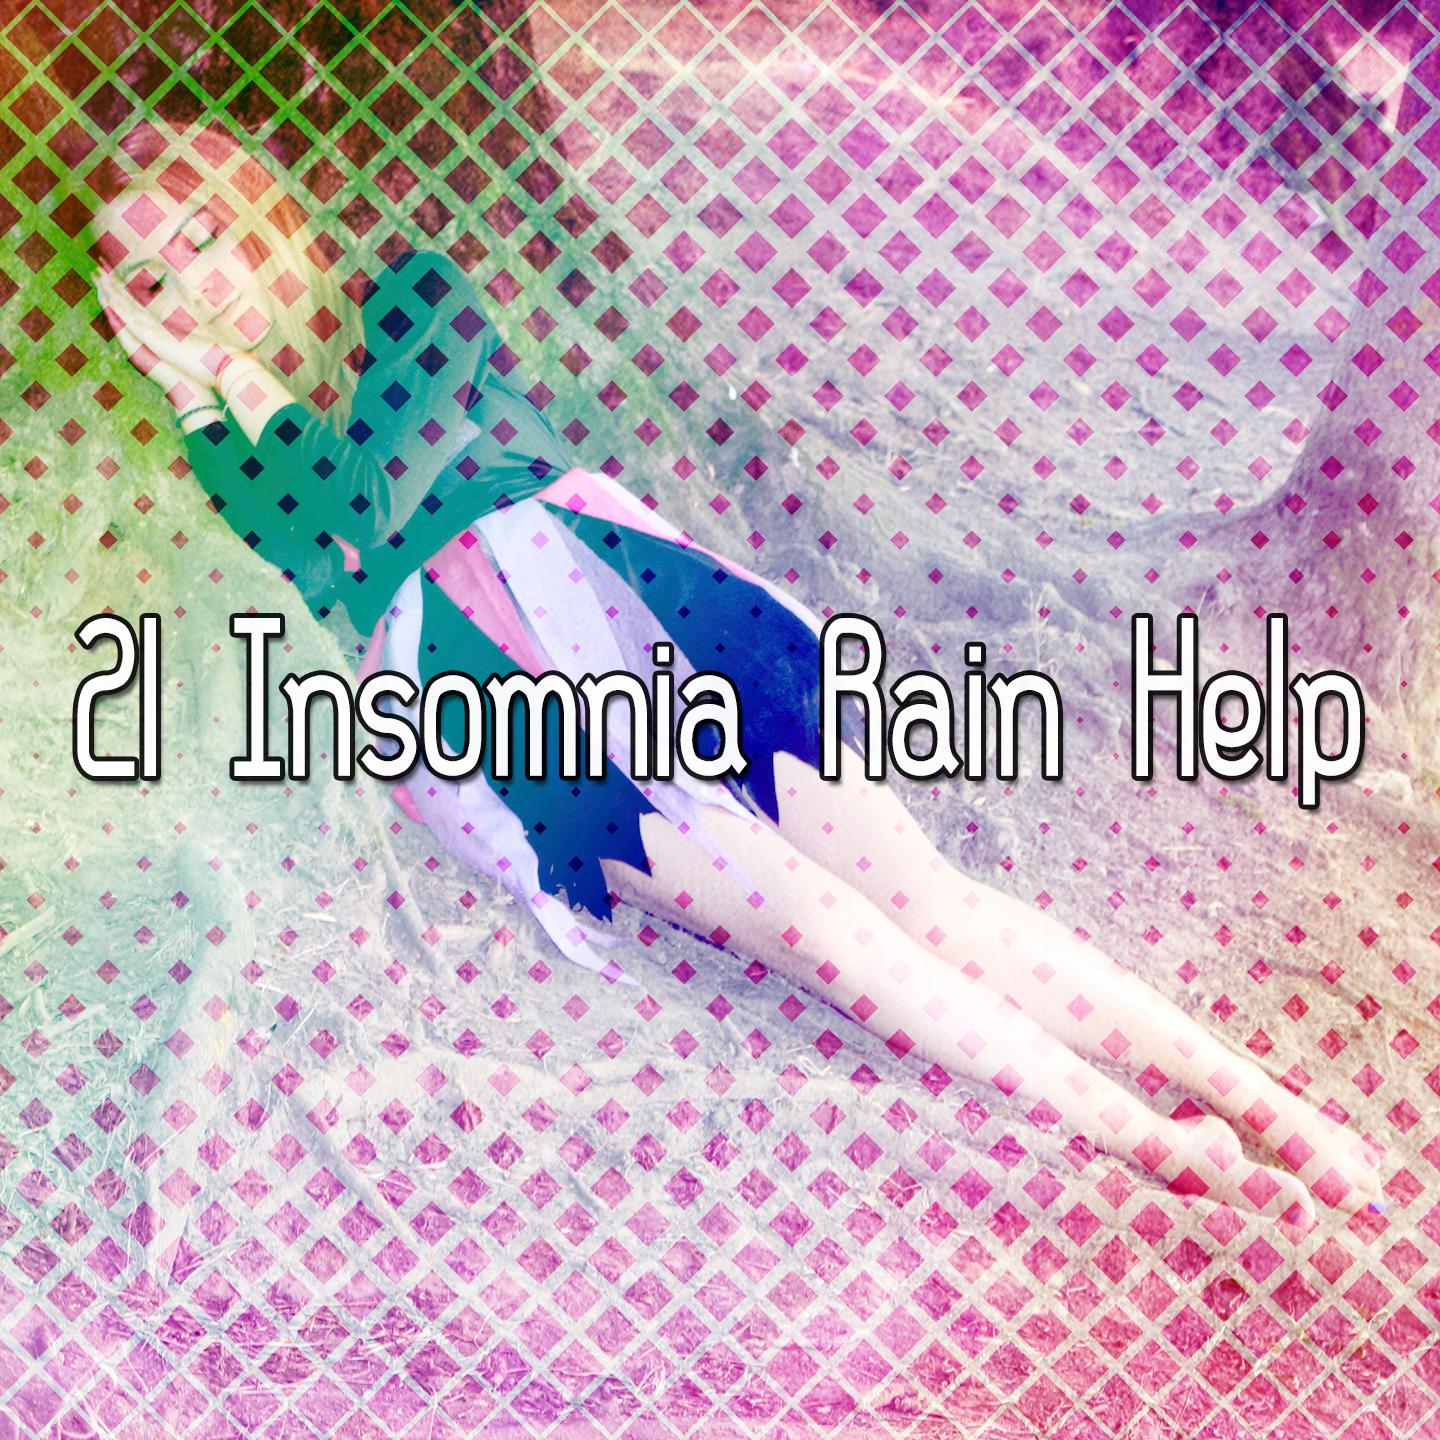 21 Insomnia Rain Help